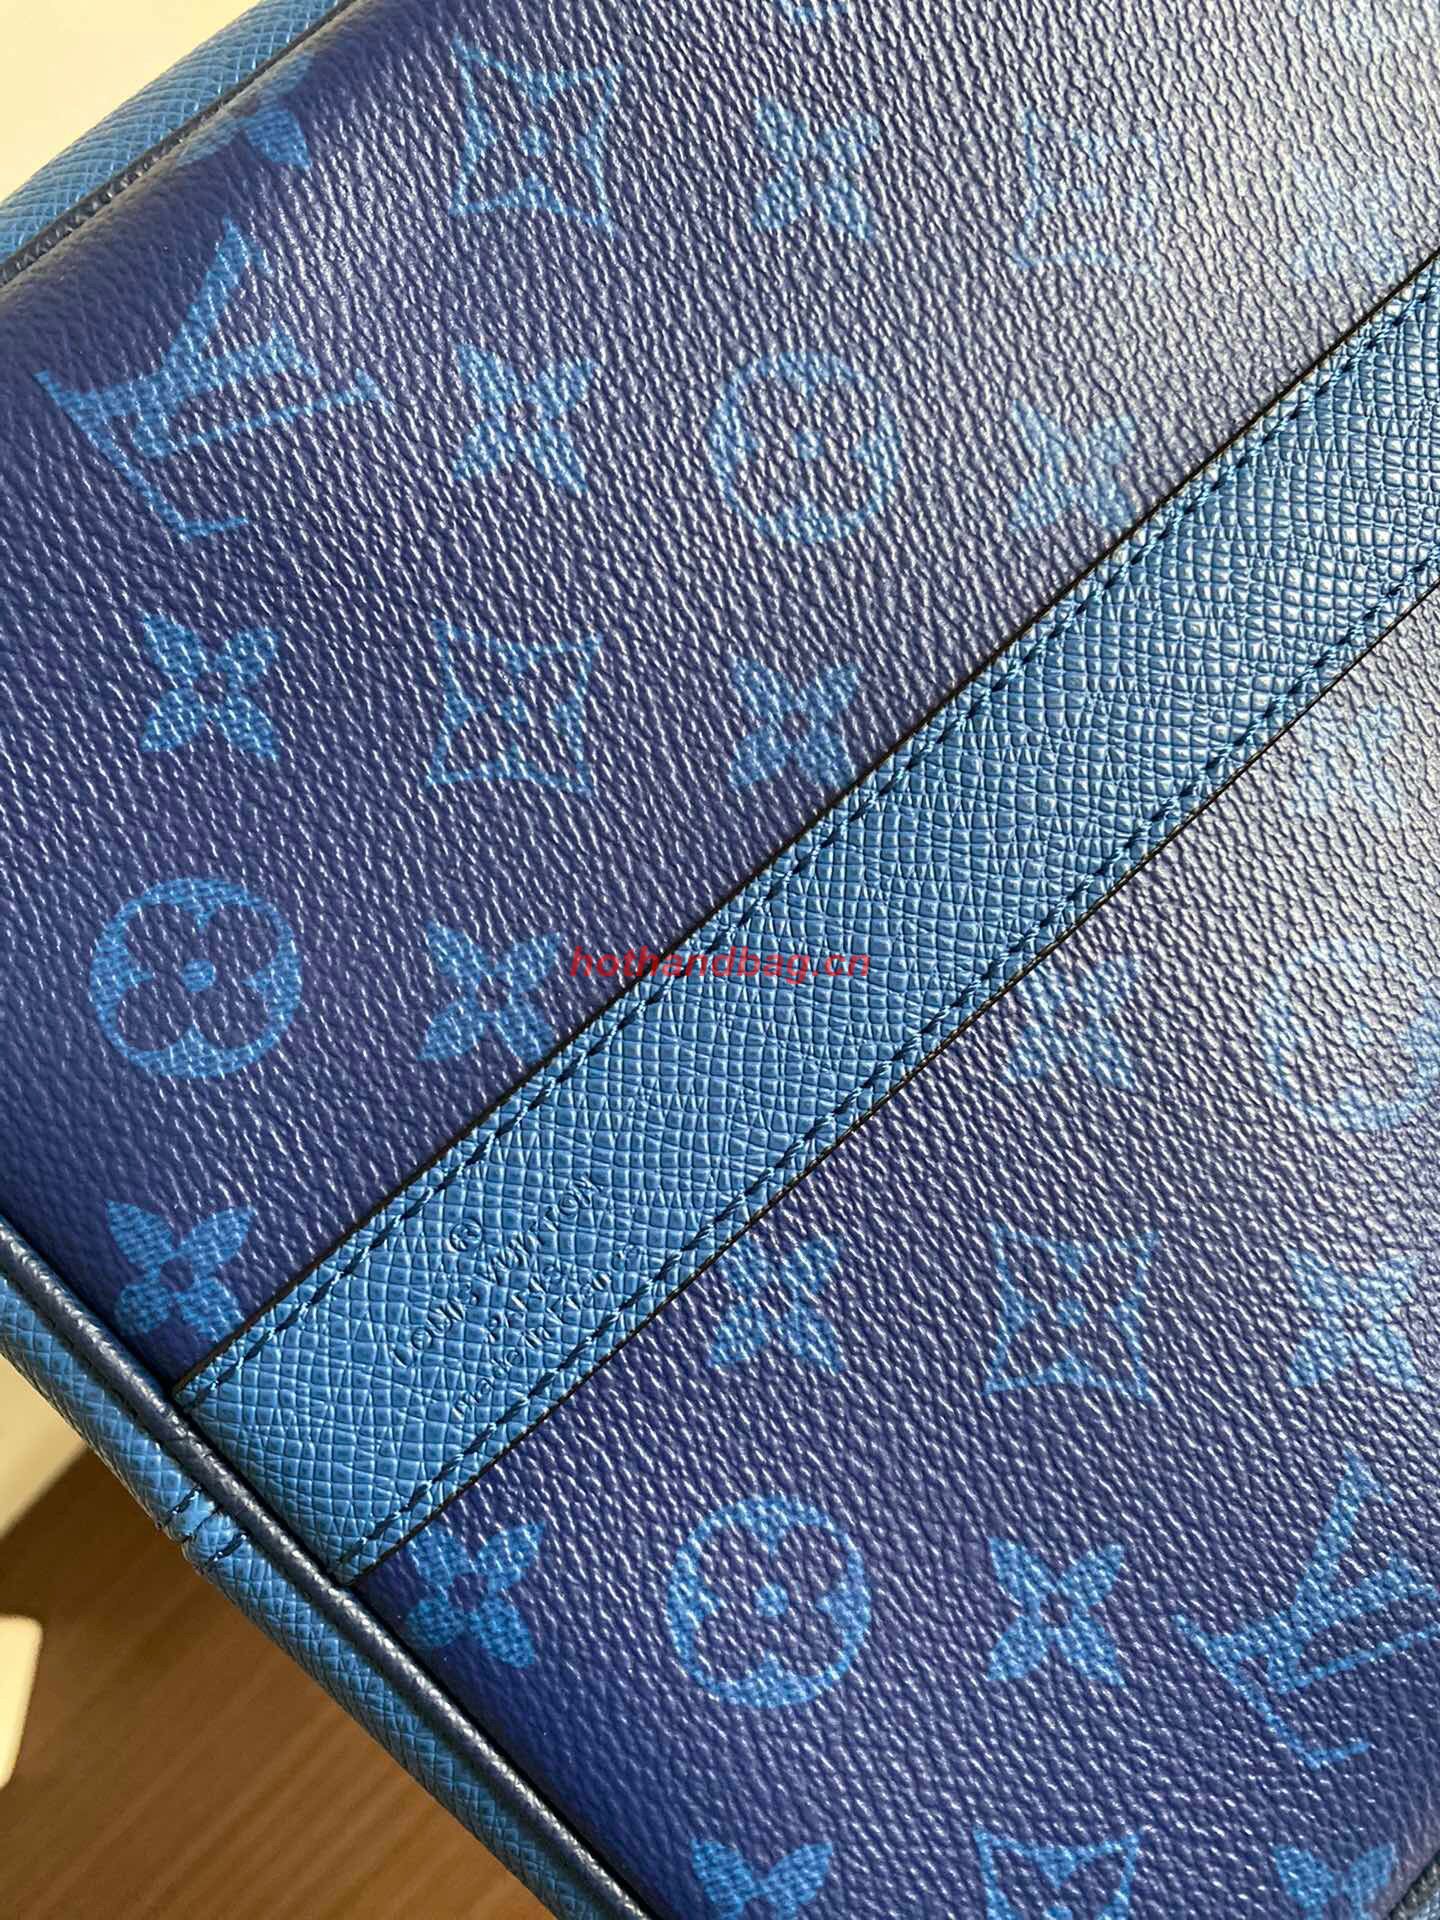 Louis Vuitton KEEPALL BANDOULIERE 50 M53766 Blue